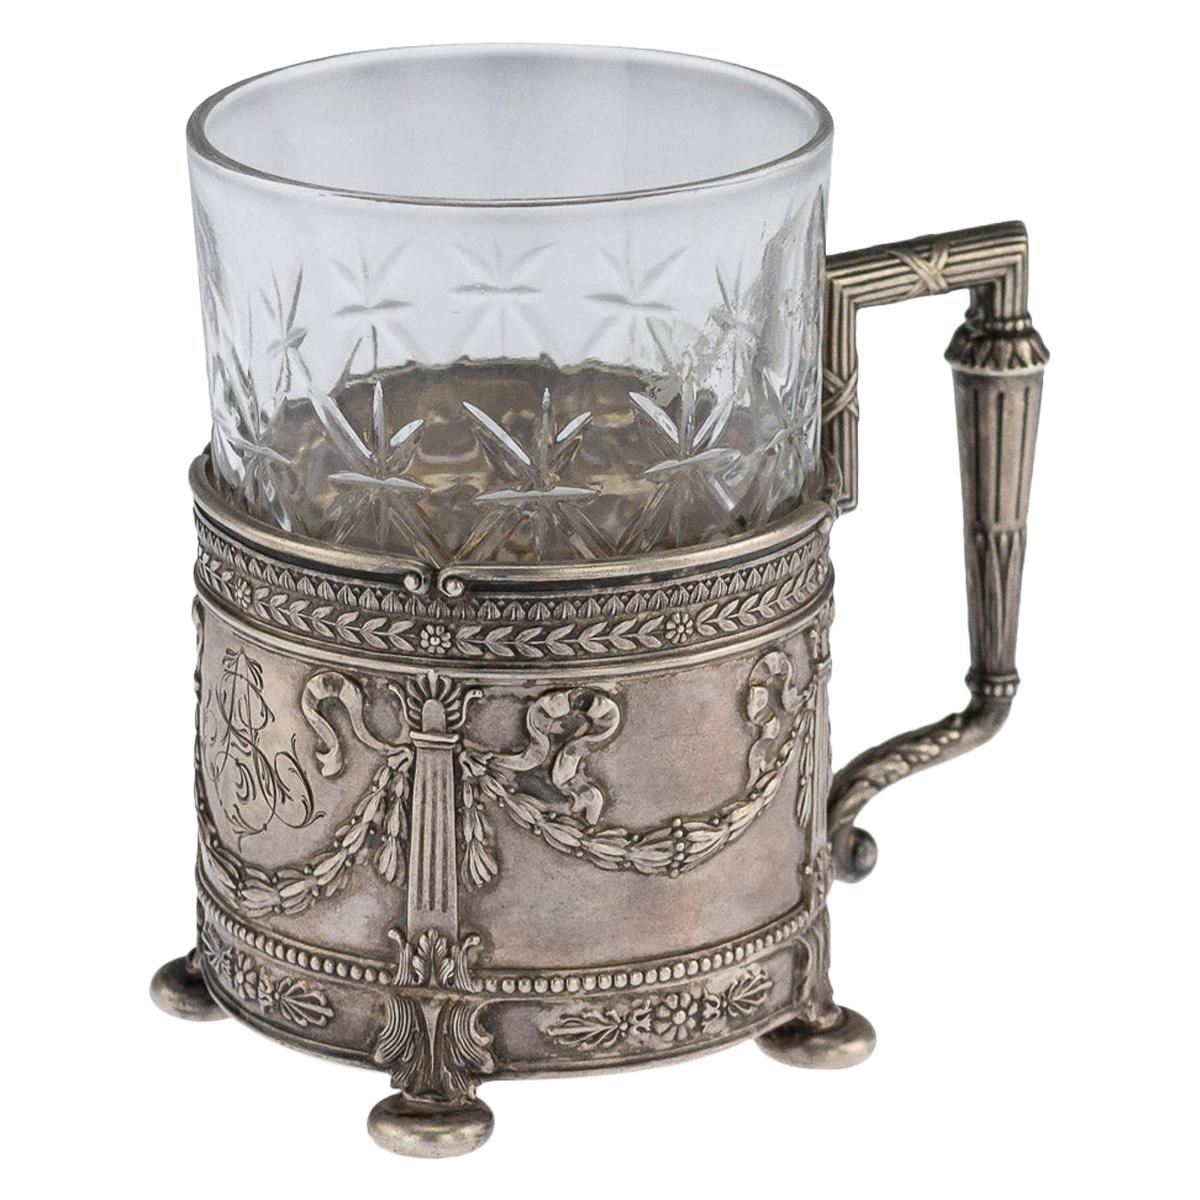 20th Century Russian Empire Silver and Cut Glass Tea Holder, Lorie, circa 1910